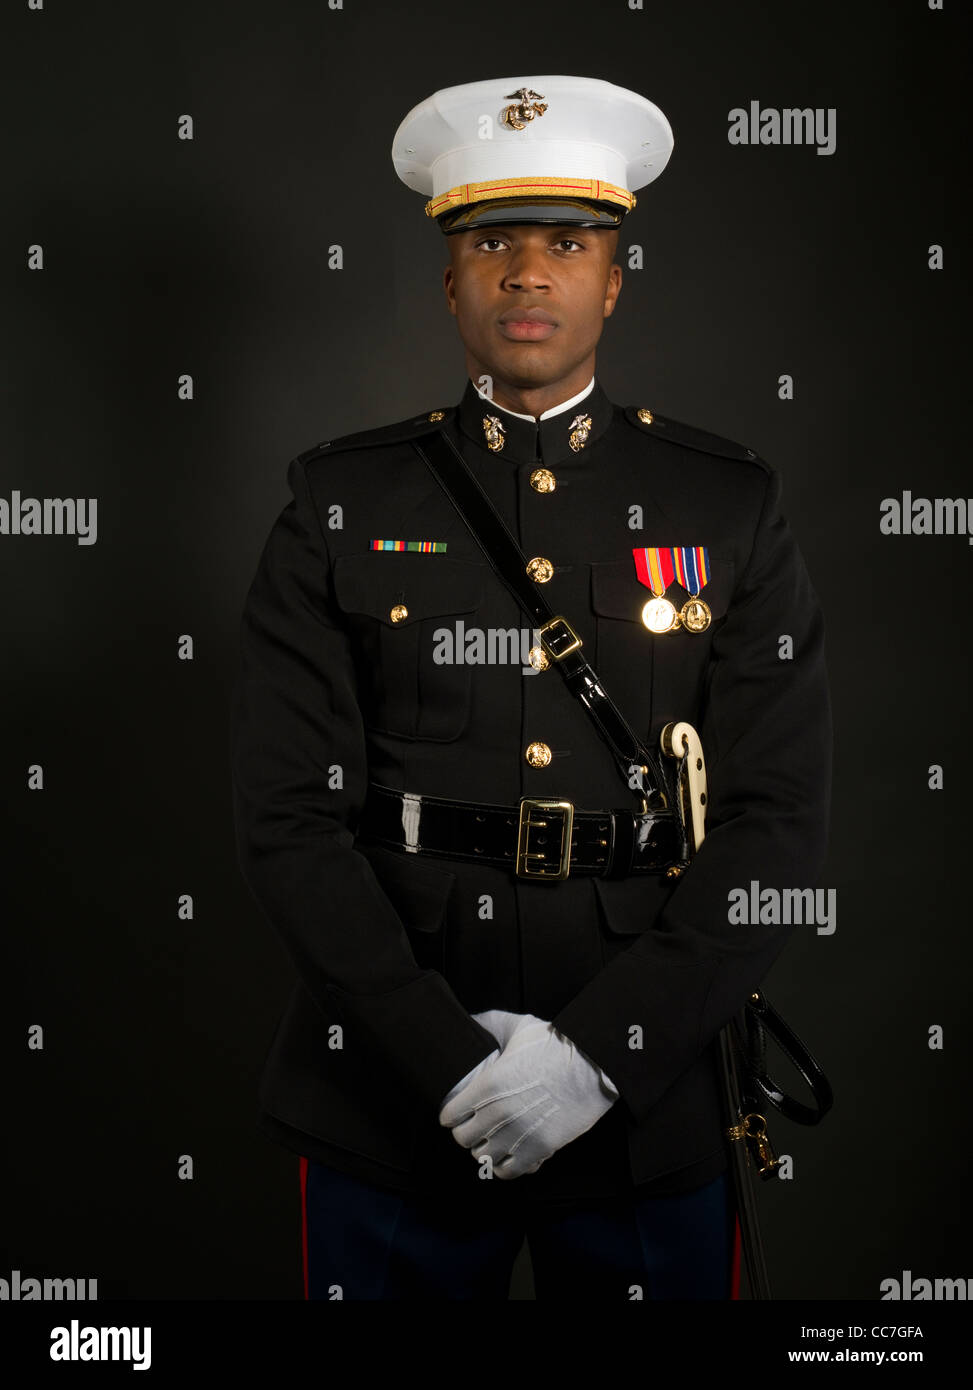 Marine Captain Uniform